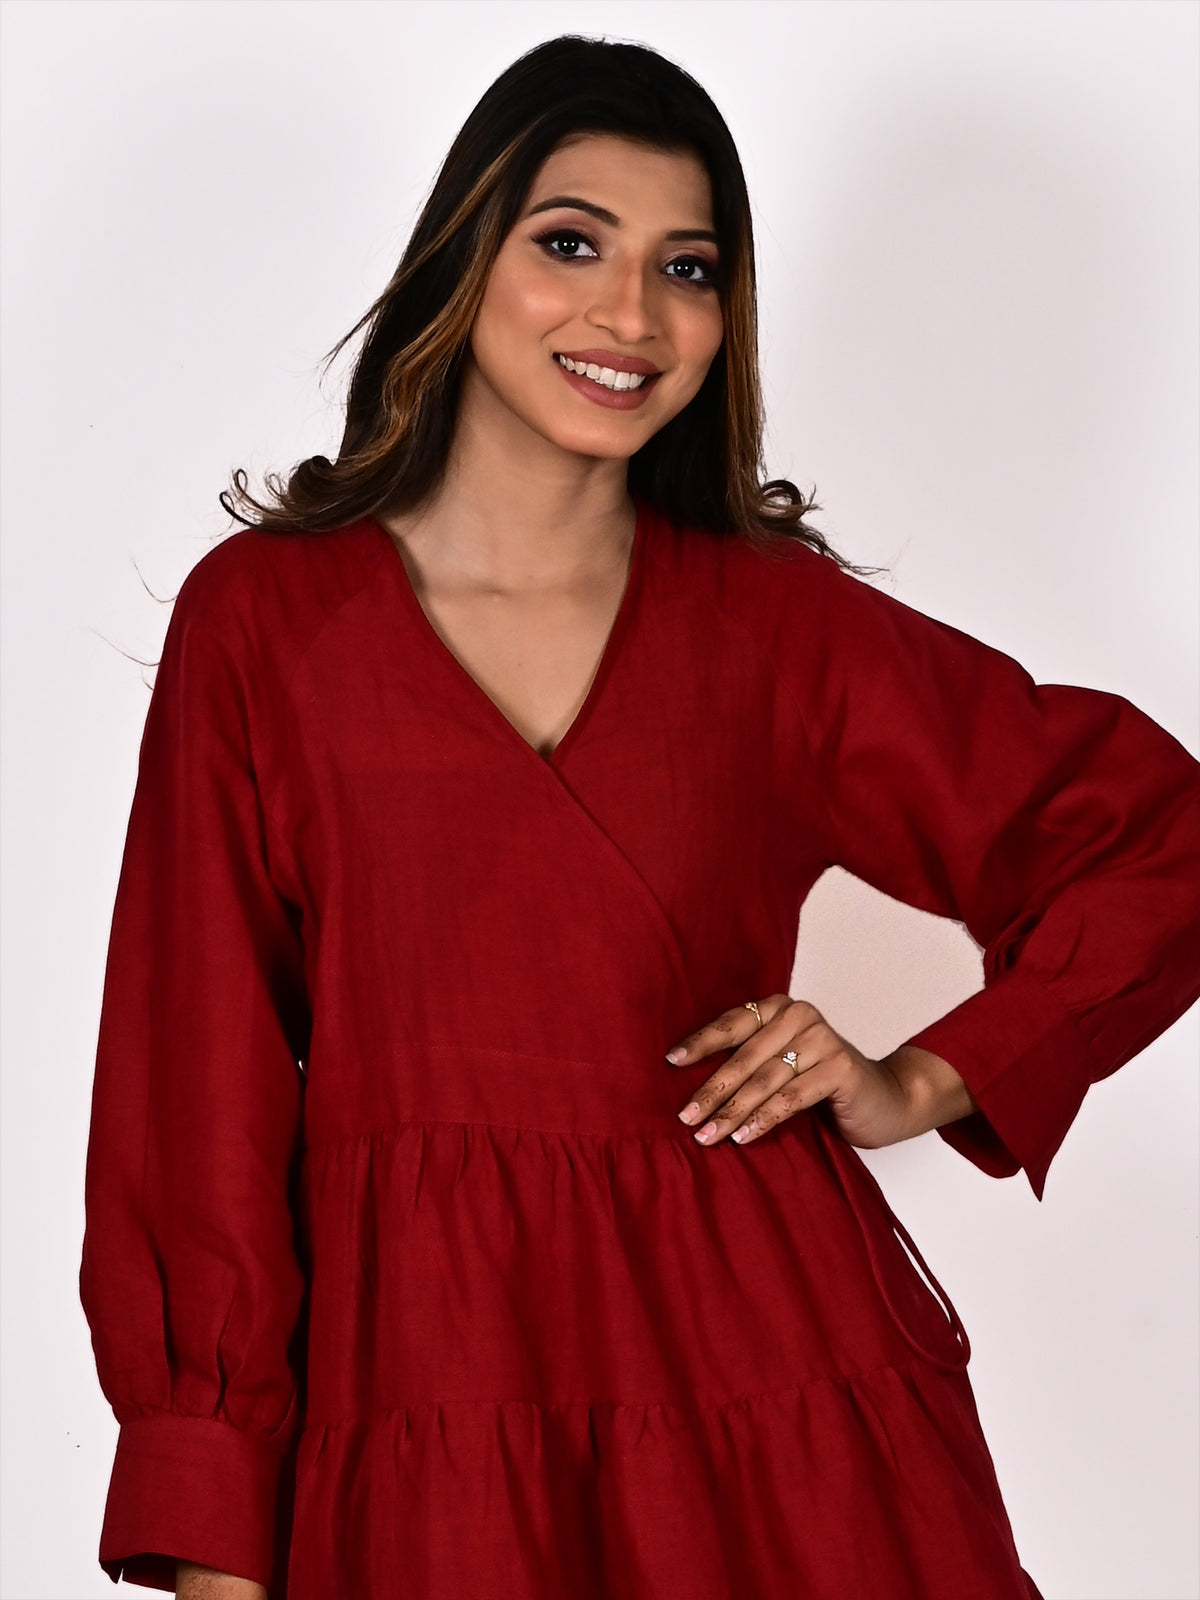 STELLA Cotton-Linen Frill Wrap Dress: Made to Order/Customizable